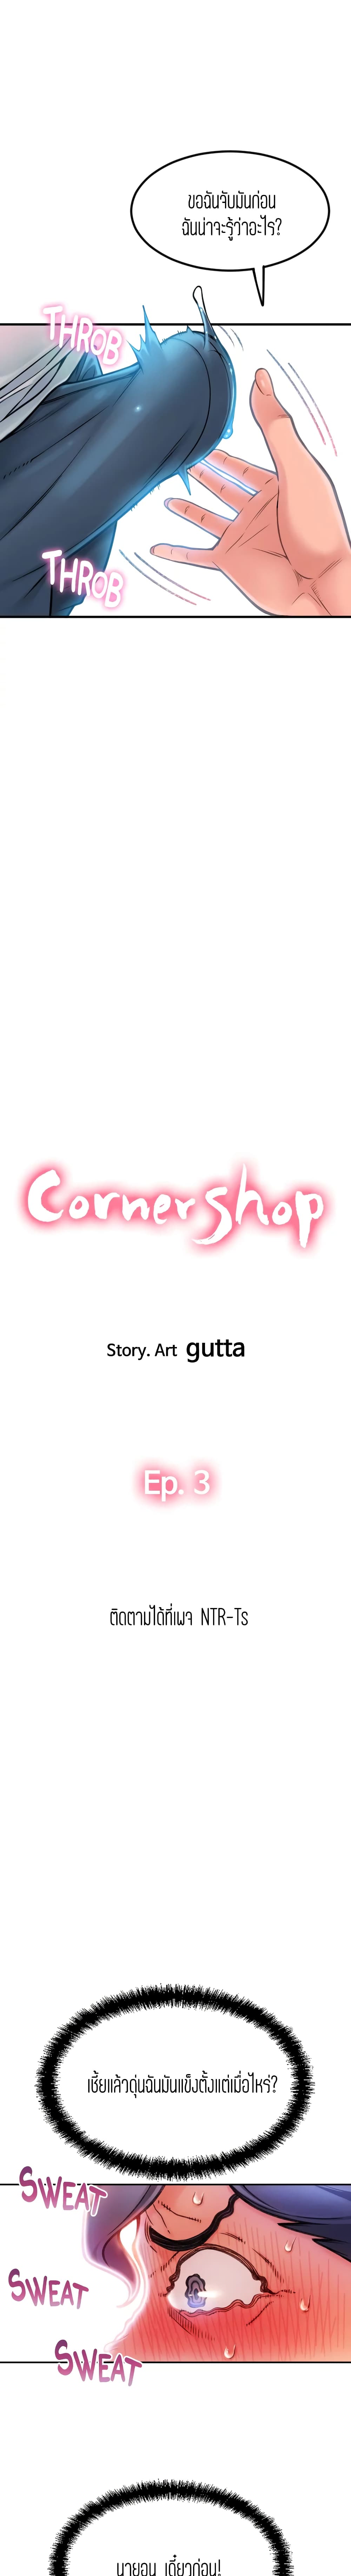 Corner Shop 3 03